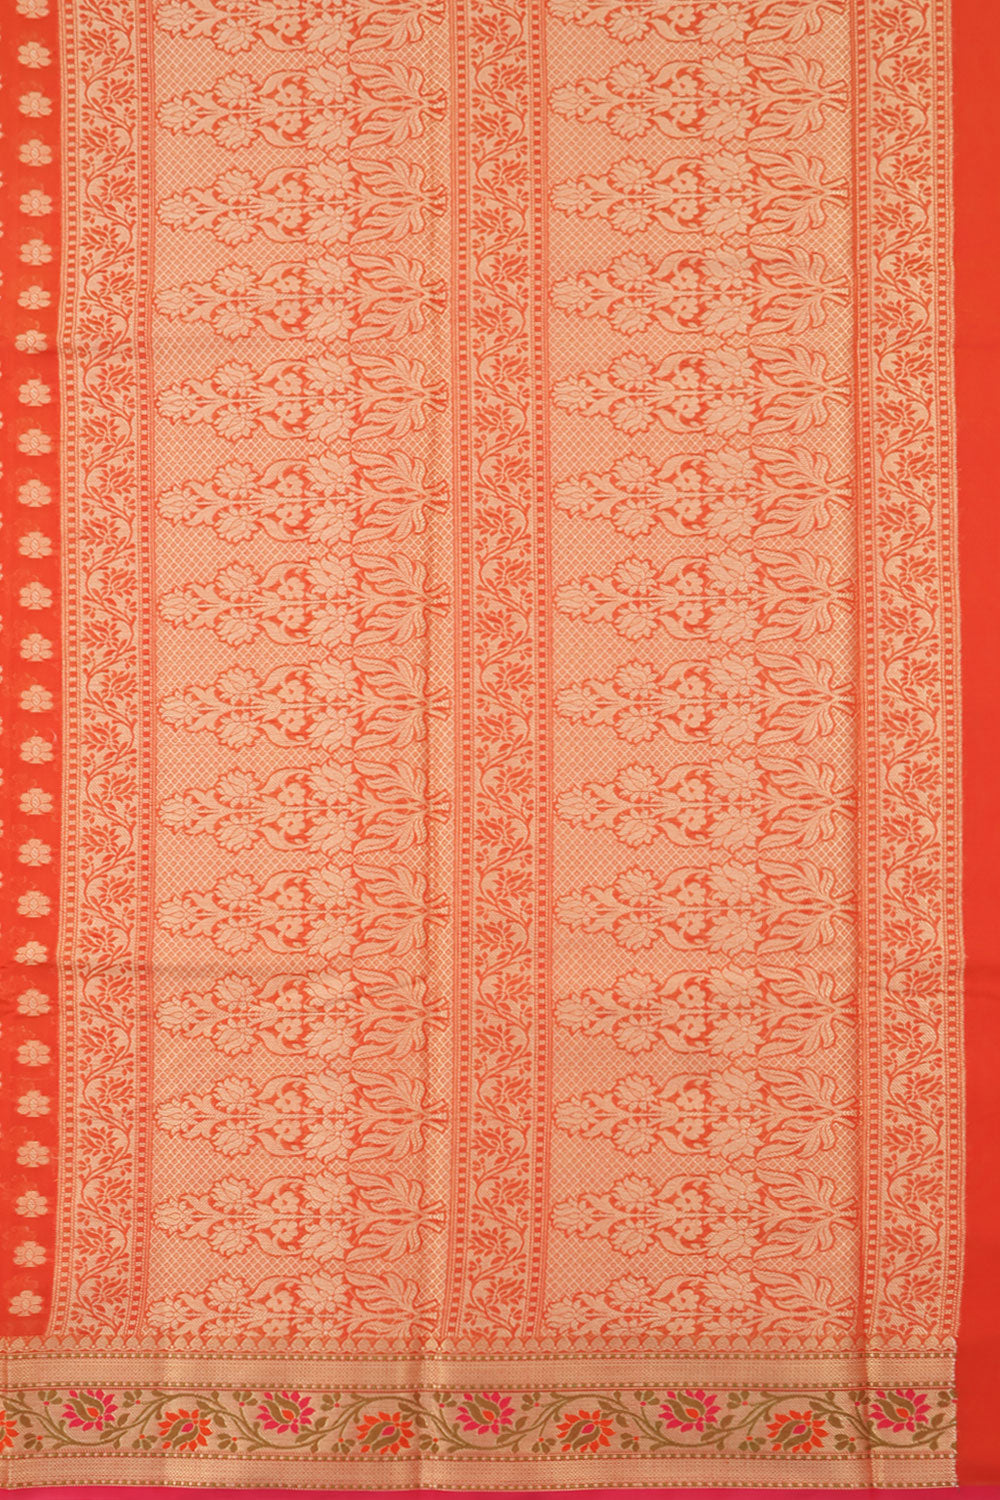 Candy Orange Handloom Banarasi Cotton Saree 10059737